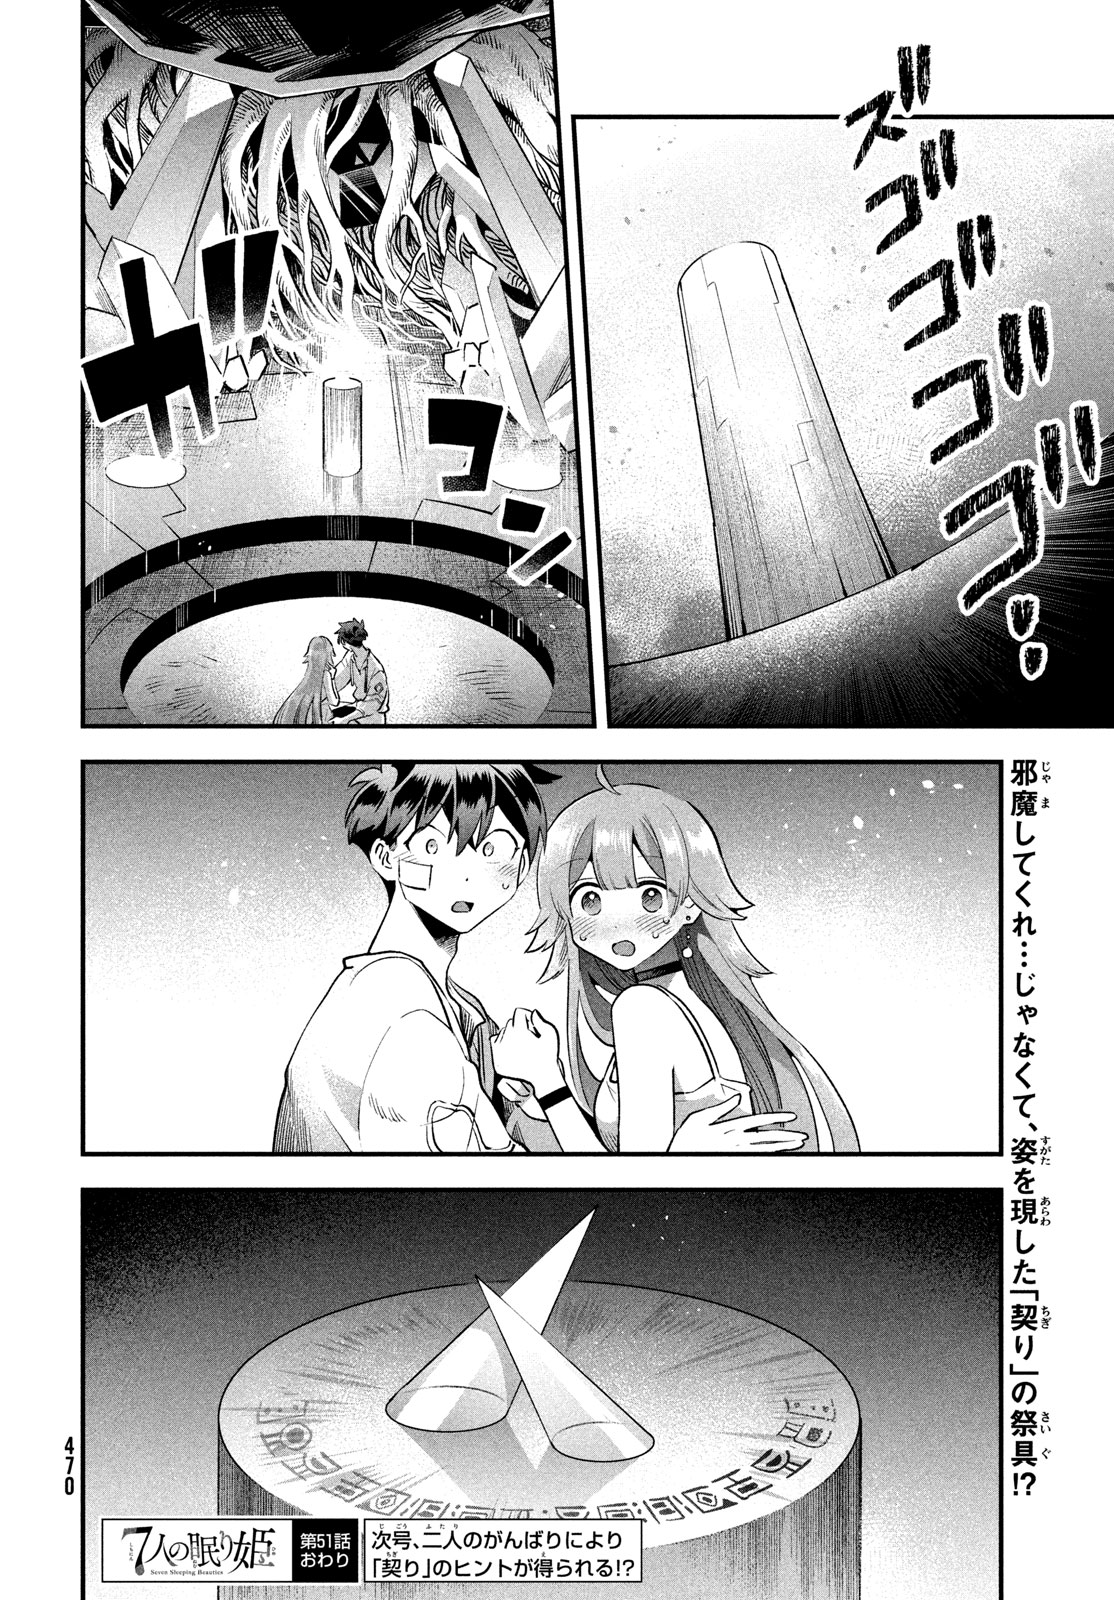 7-nin no Nemuri Hime - Chapter 51 - Page 14